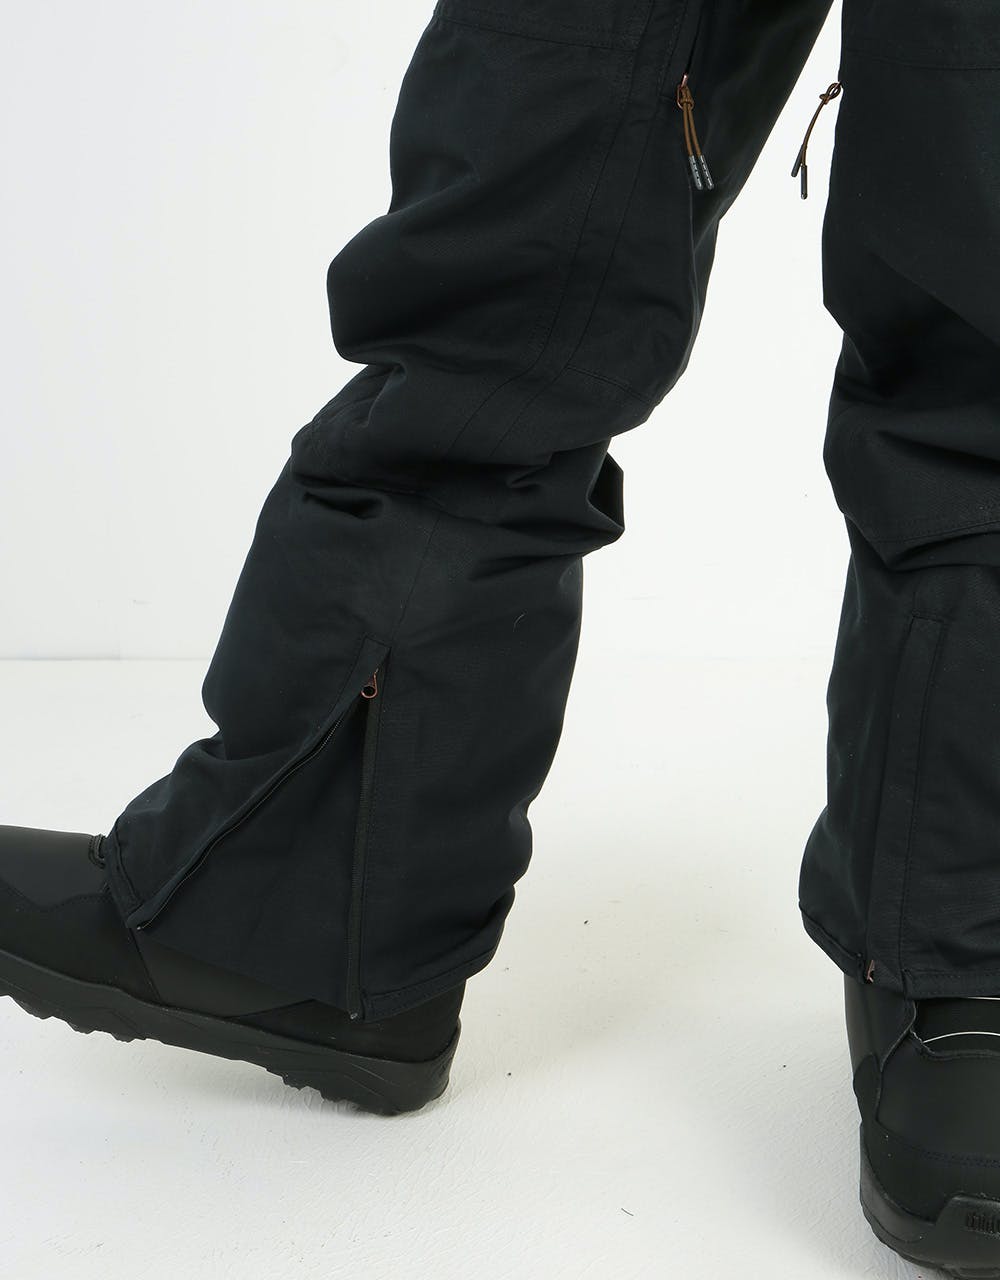 L1 Americana 2020 Snowboard Pants - Black